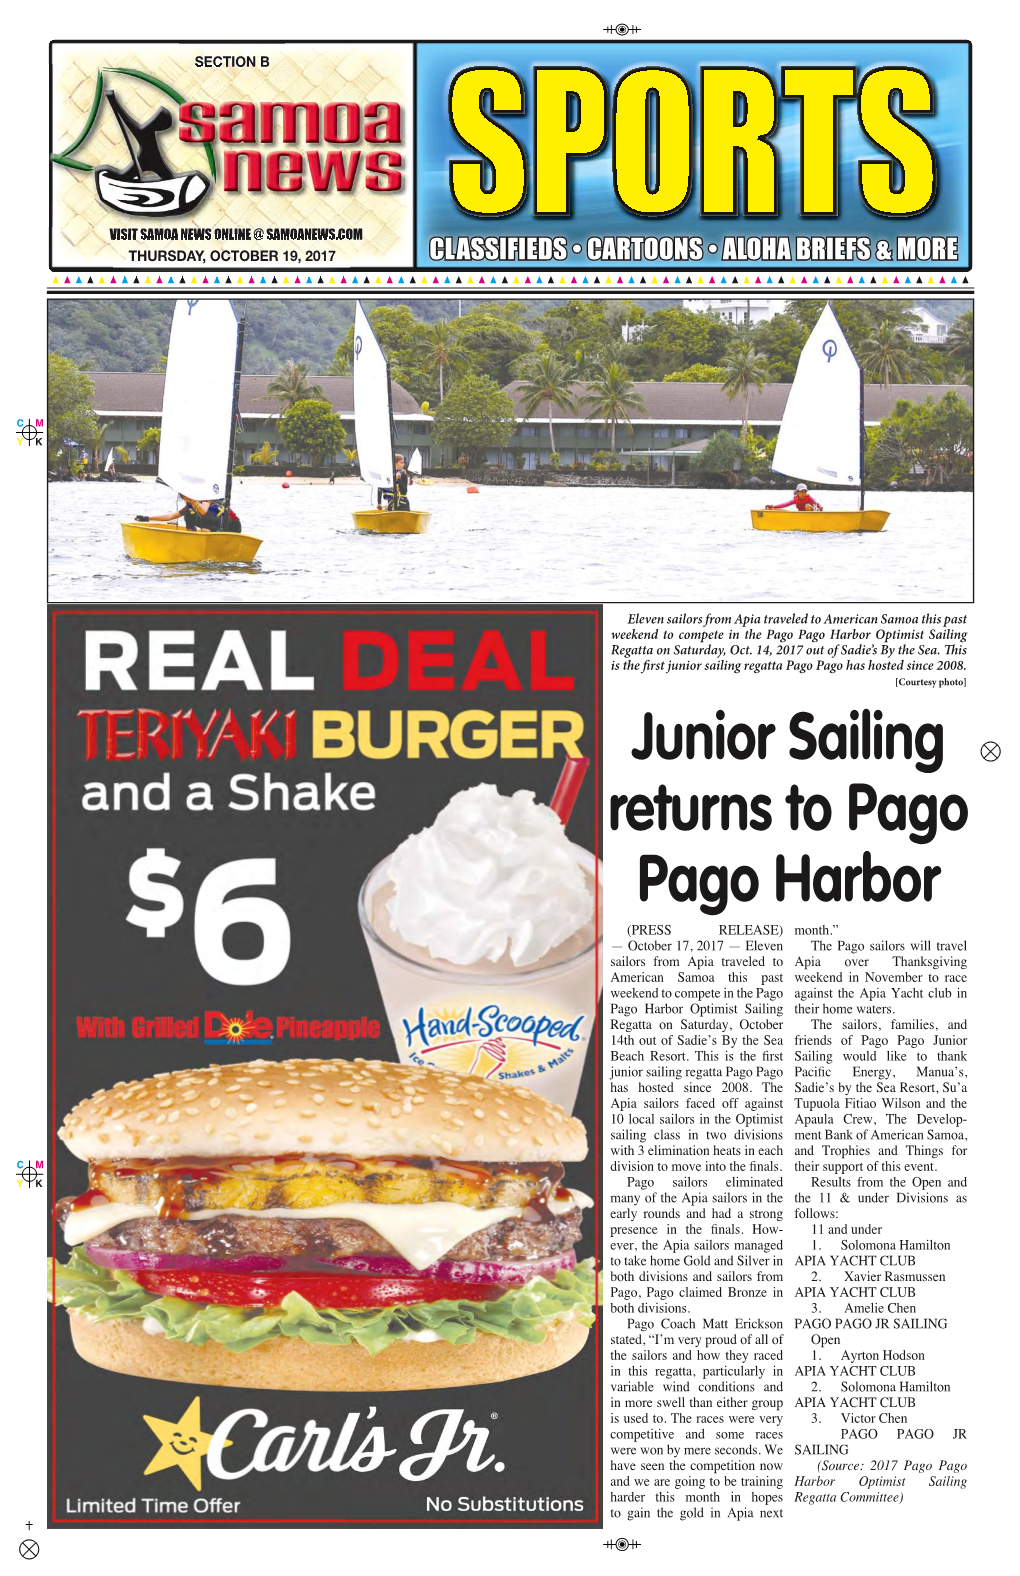 Junior Sailing Returns to Pago Pago Harbor